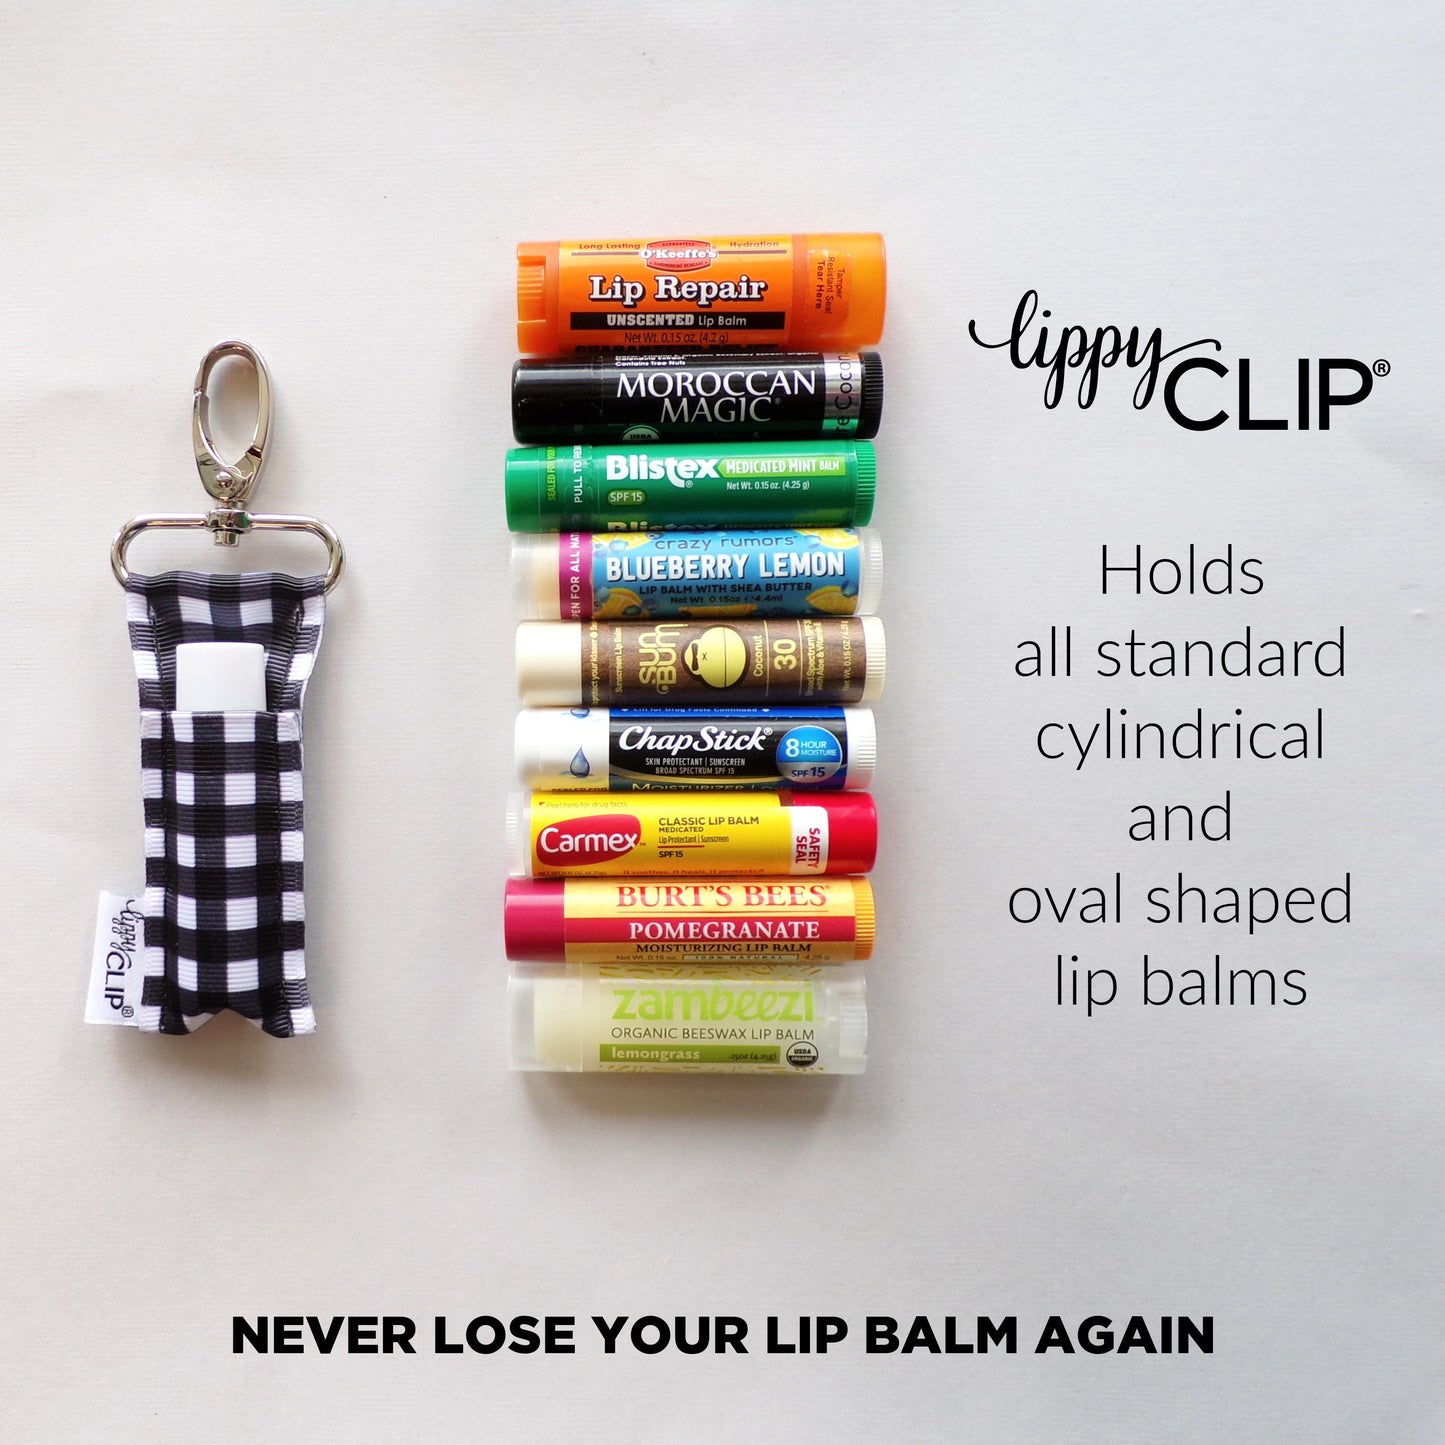 BASIC: Golden Yellow LippyClip® - Discount Already Applied